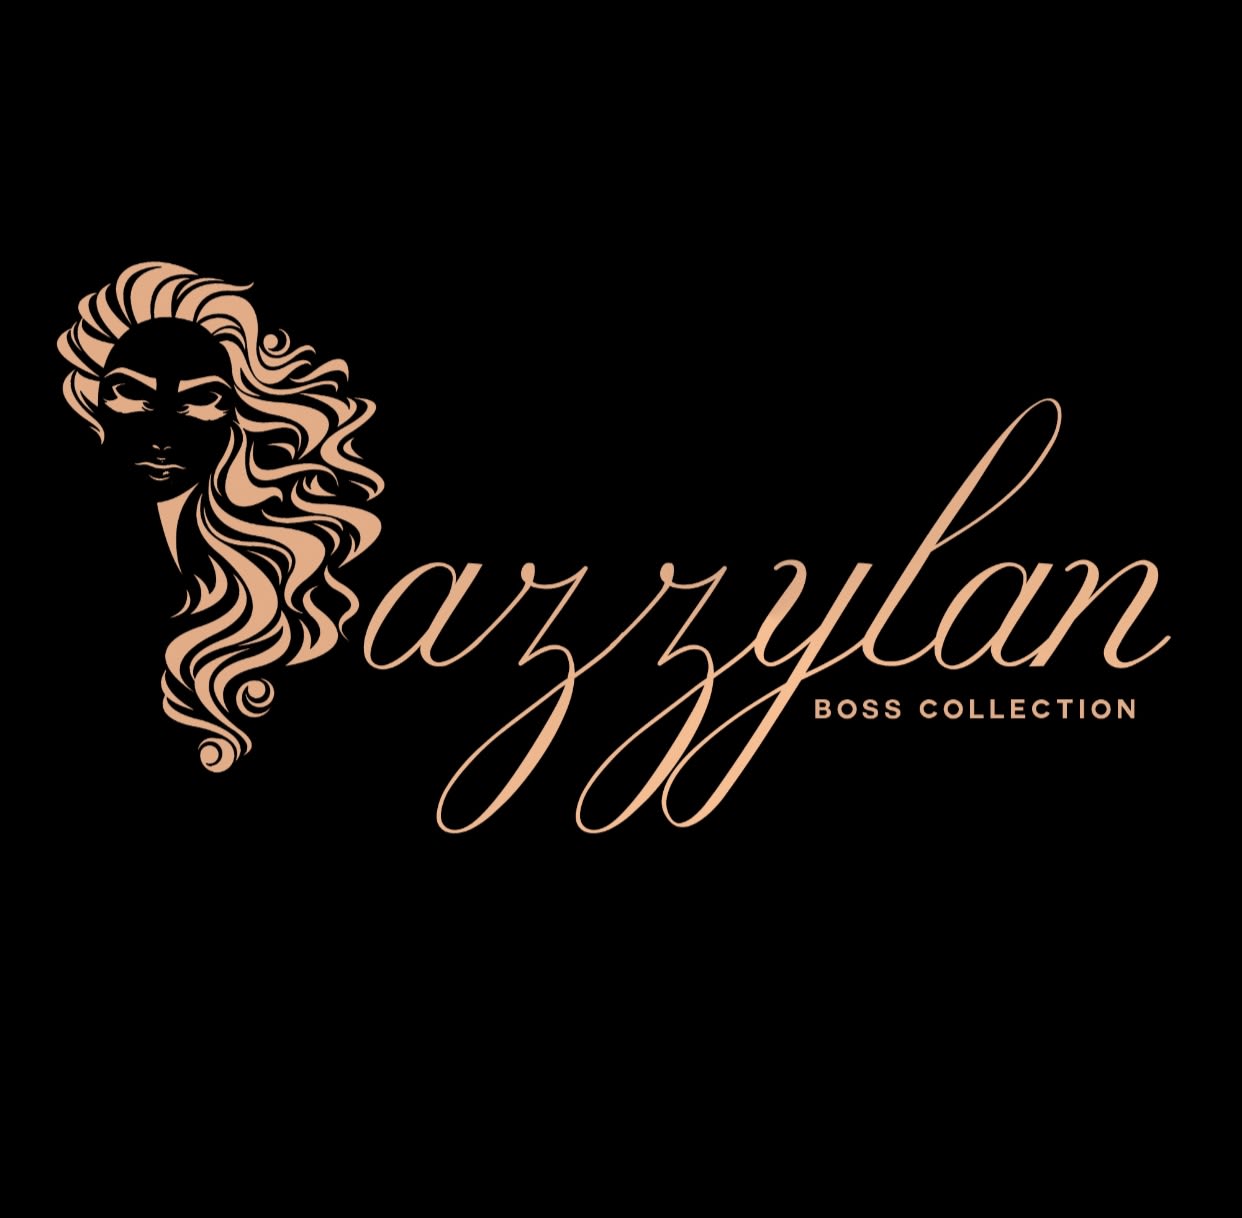 Dazzylan Boss Collection